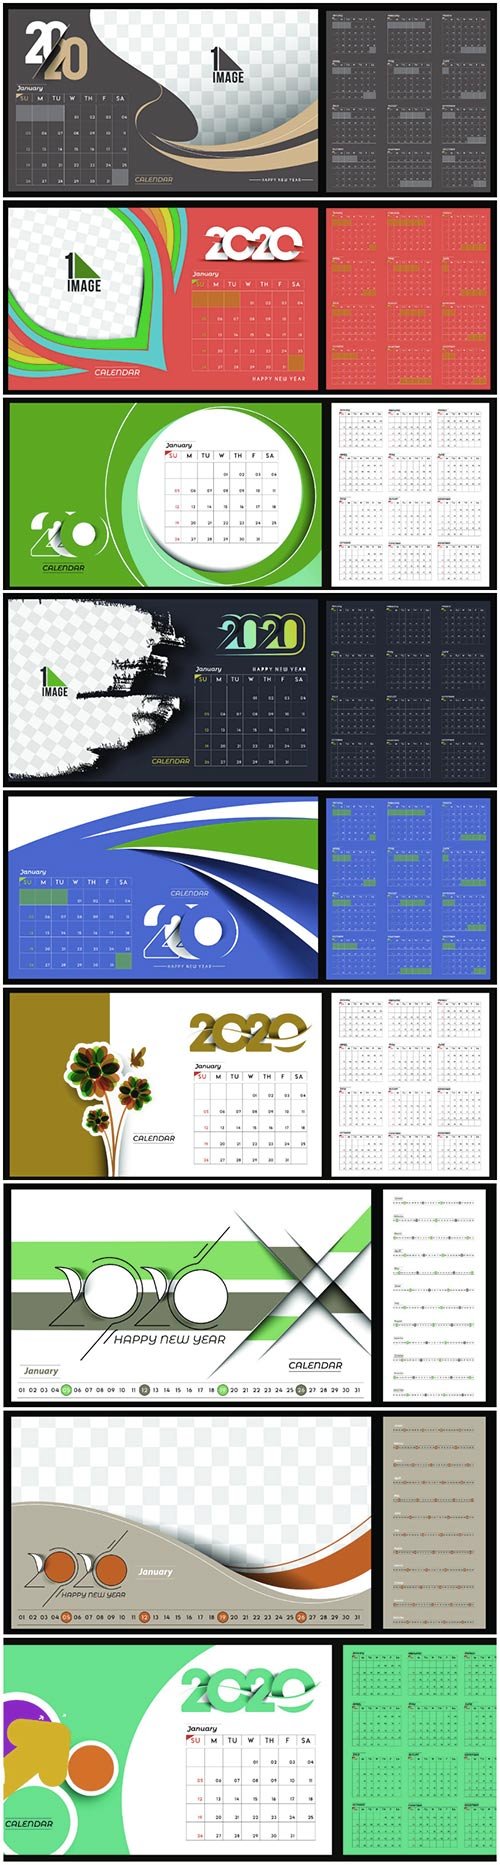 Happy new year 2020 Calendar